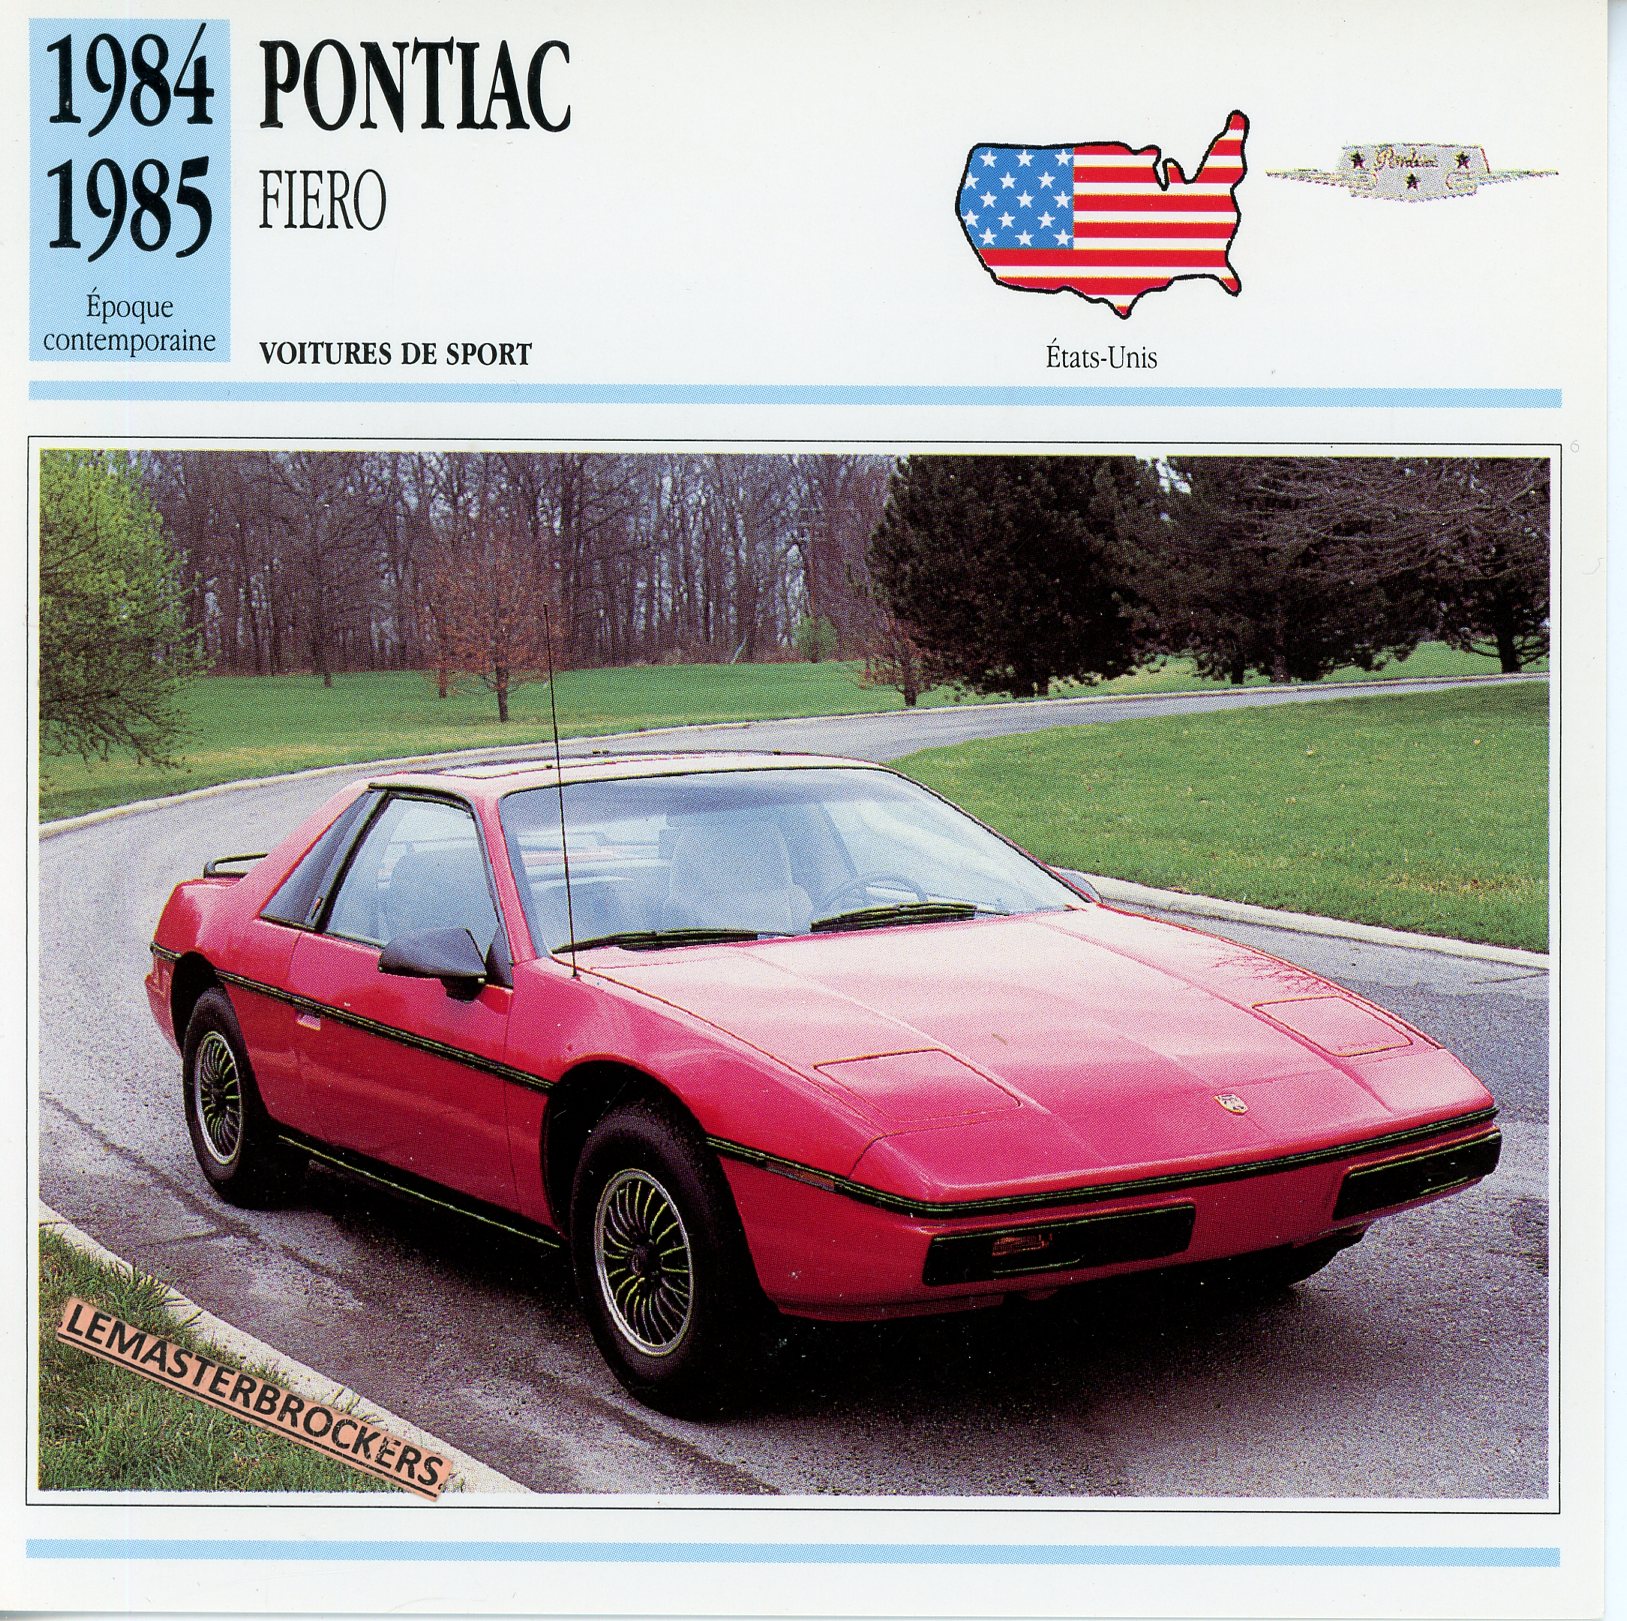 PONTIAC-FIERO-1984-1985-405T16-FICHE-AUTO-ATLAS-LEMASTERBROCKERS